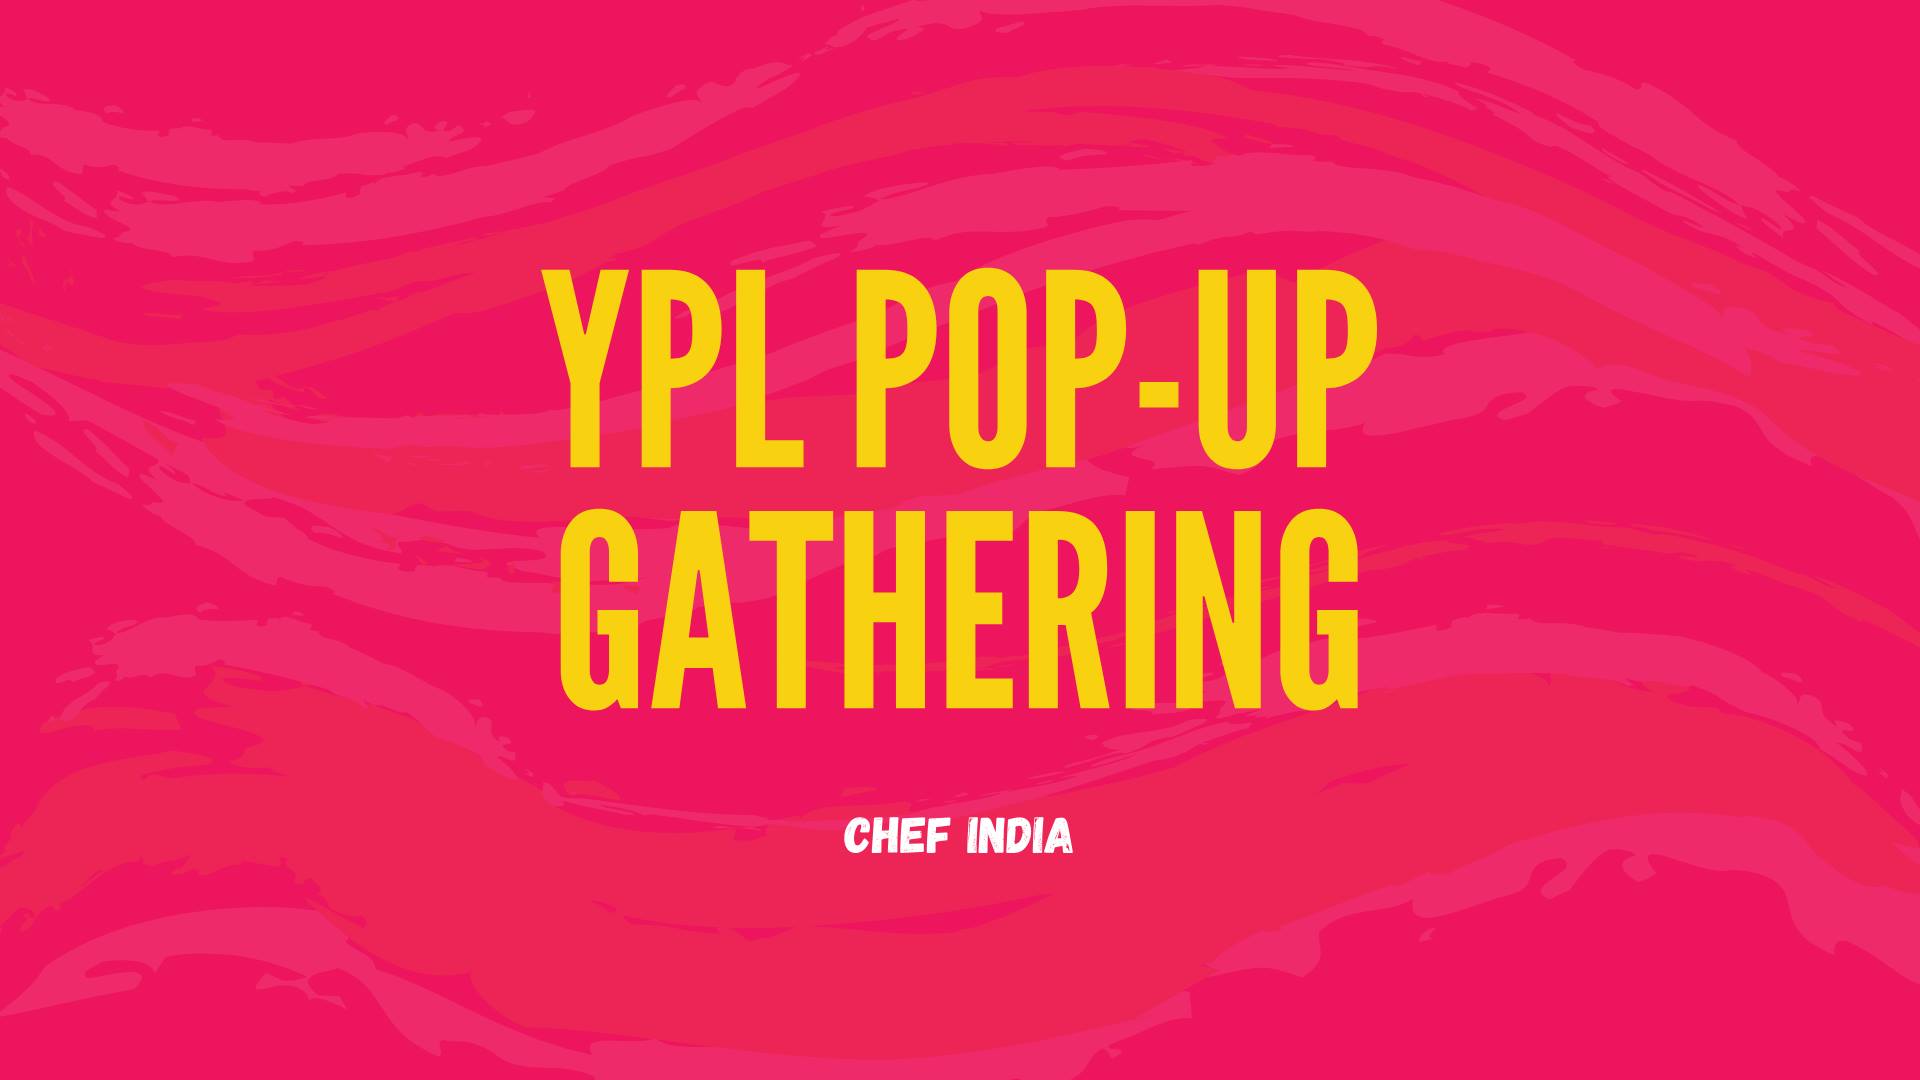 Meet Us At The Next YPL Pop-Up Gathering! Thumbnail